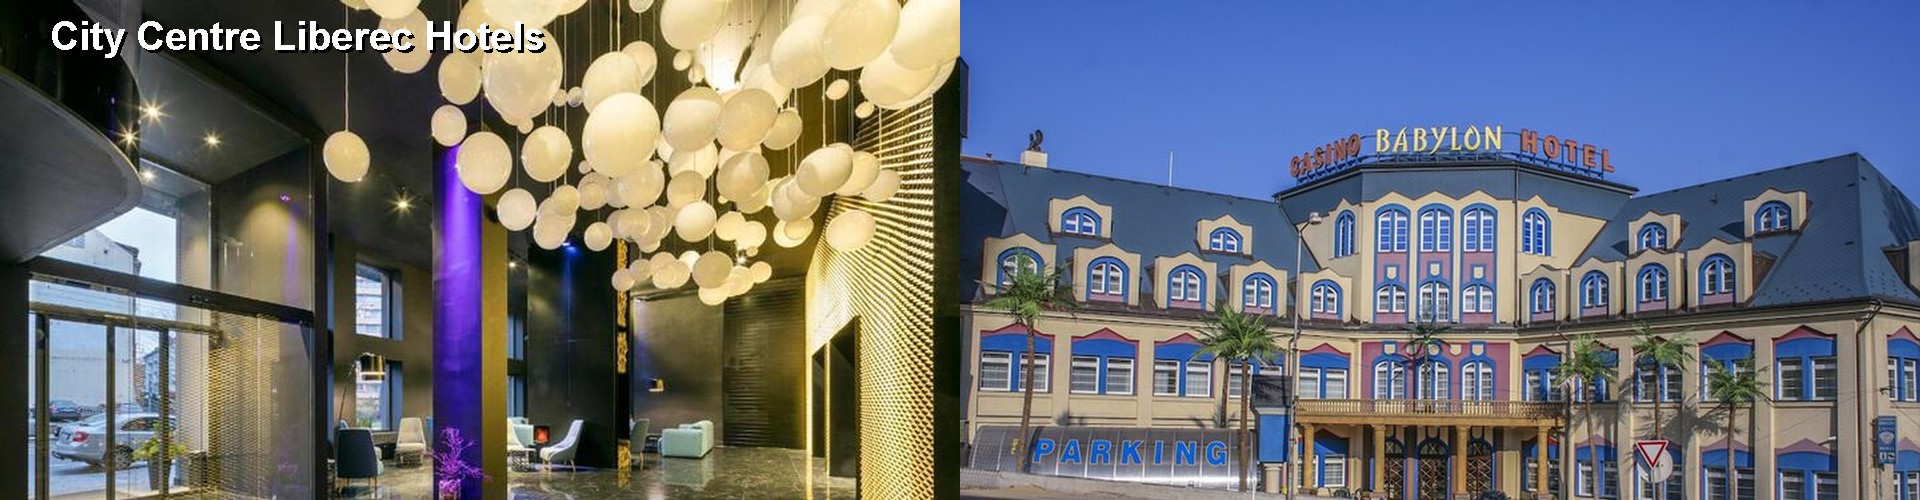 5 Best Hotels near City Centre Liberec